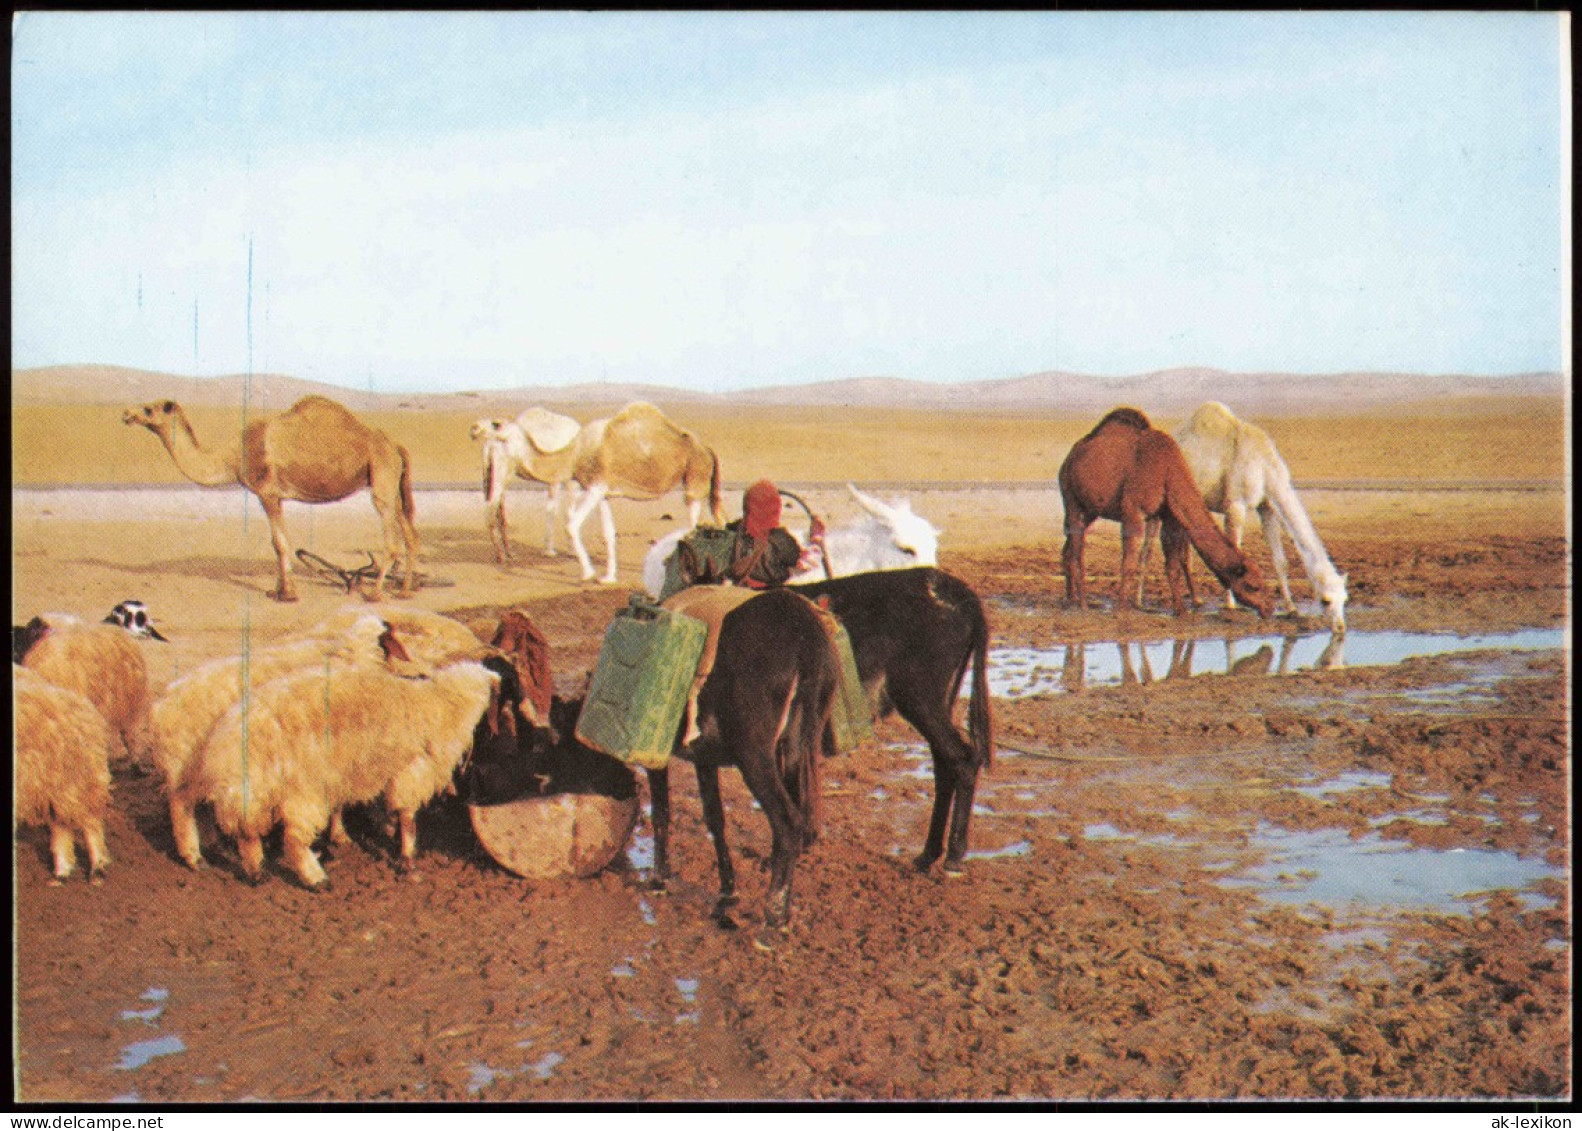 Postcard .Israel JUDEAN DESERT NEAR THE WELL IN THE DESERT 1980 - Israel